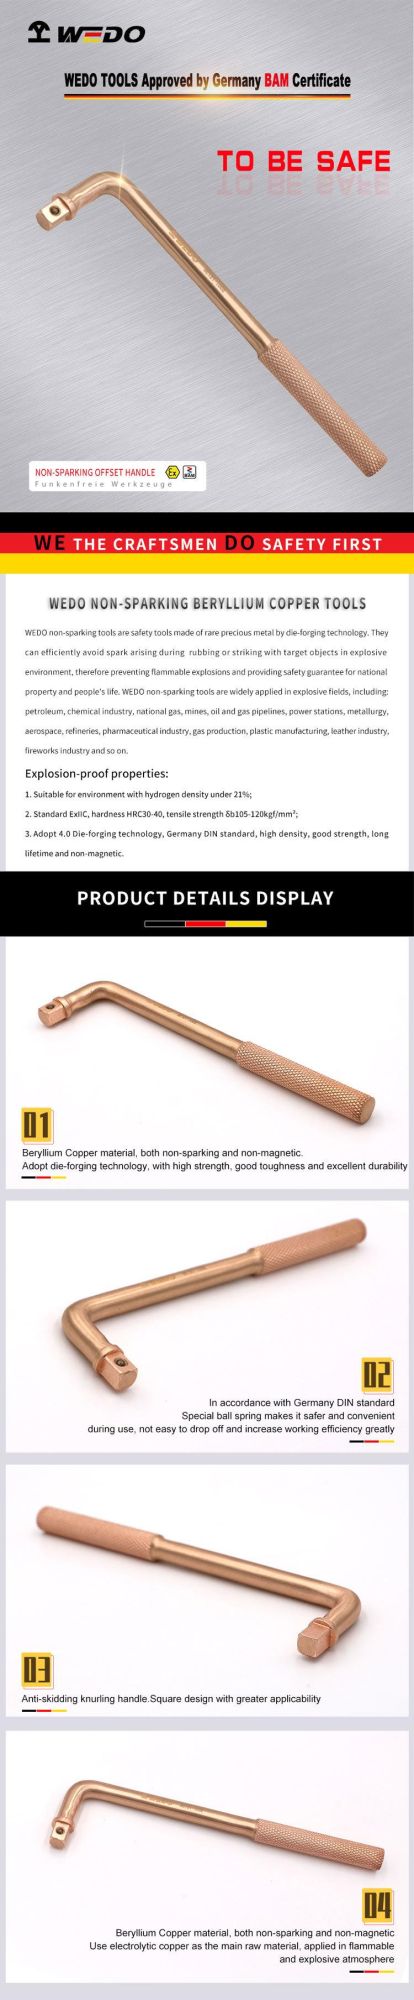 WEDO Non-Magnetic/Sparking Socket Wrench Beryllium Copper Offset Handle